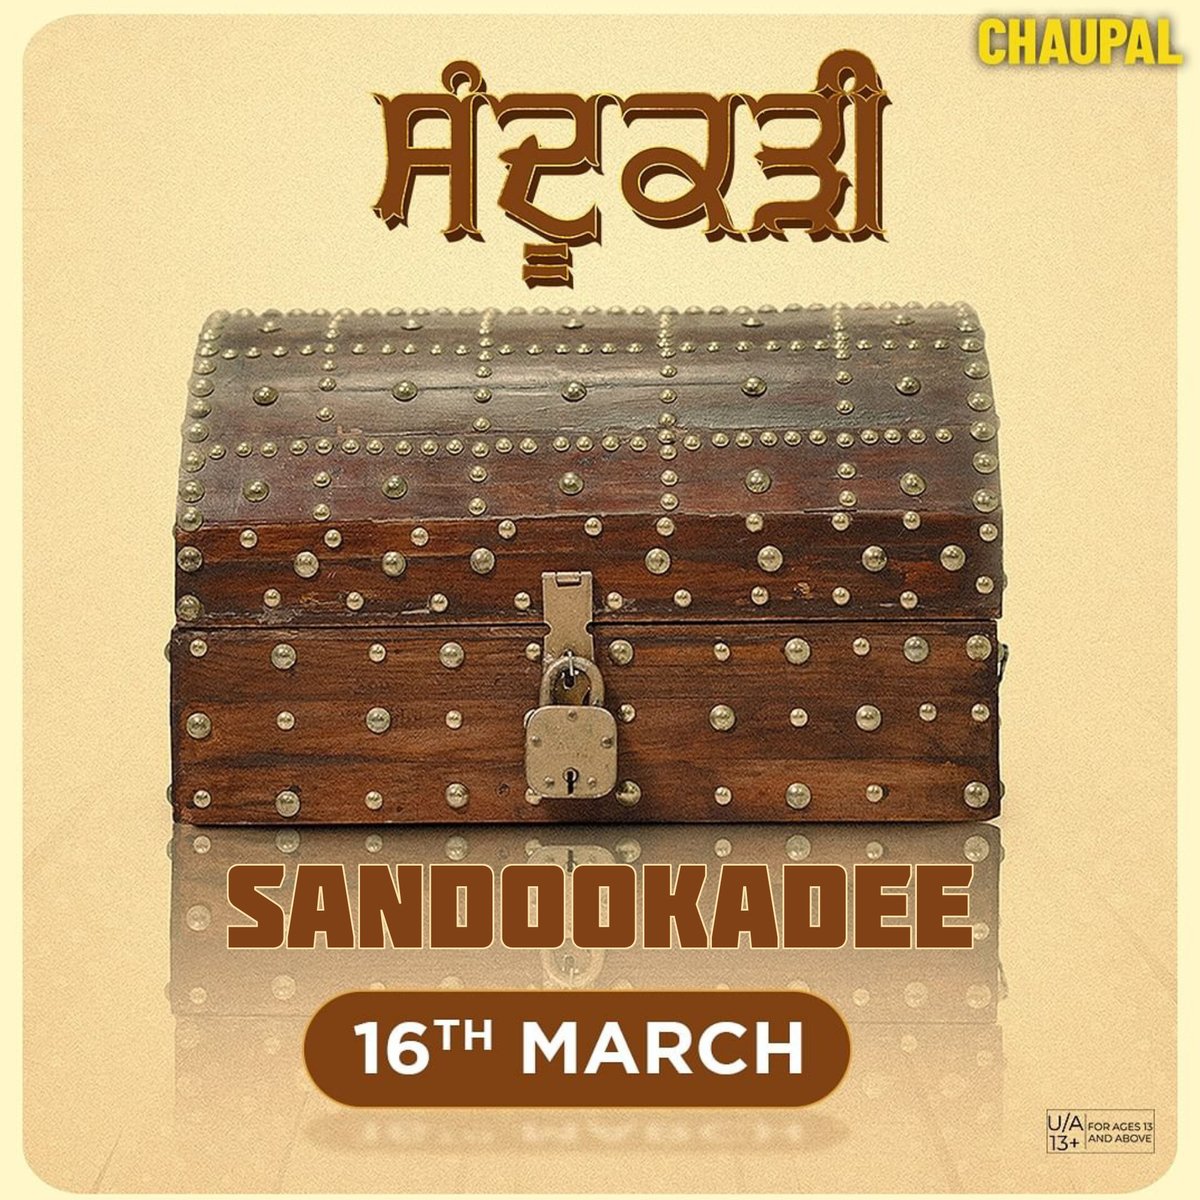 Punjabi Film #Sandookadee Streaming From 16th March On #ChaupalApp.
Starring: #AshishDuggal, #MahabirBhullar, #JatinderKaur, #NaginderGakhar, #SatwantKaur, #SunnyGill, #DeepMandeep& More.
Written & Directed By #PrabhjotSinghCheema.

#SandookadeeOnChaupal #PunjabiFilm #PrimeVerse